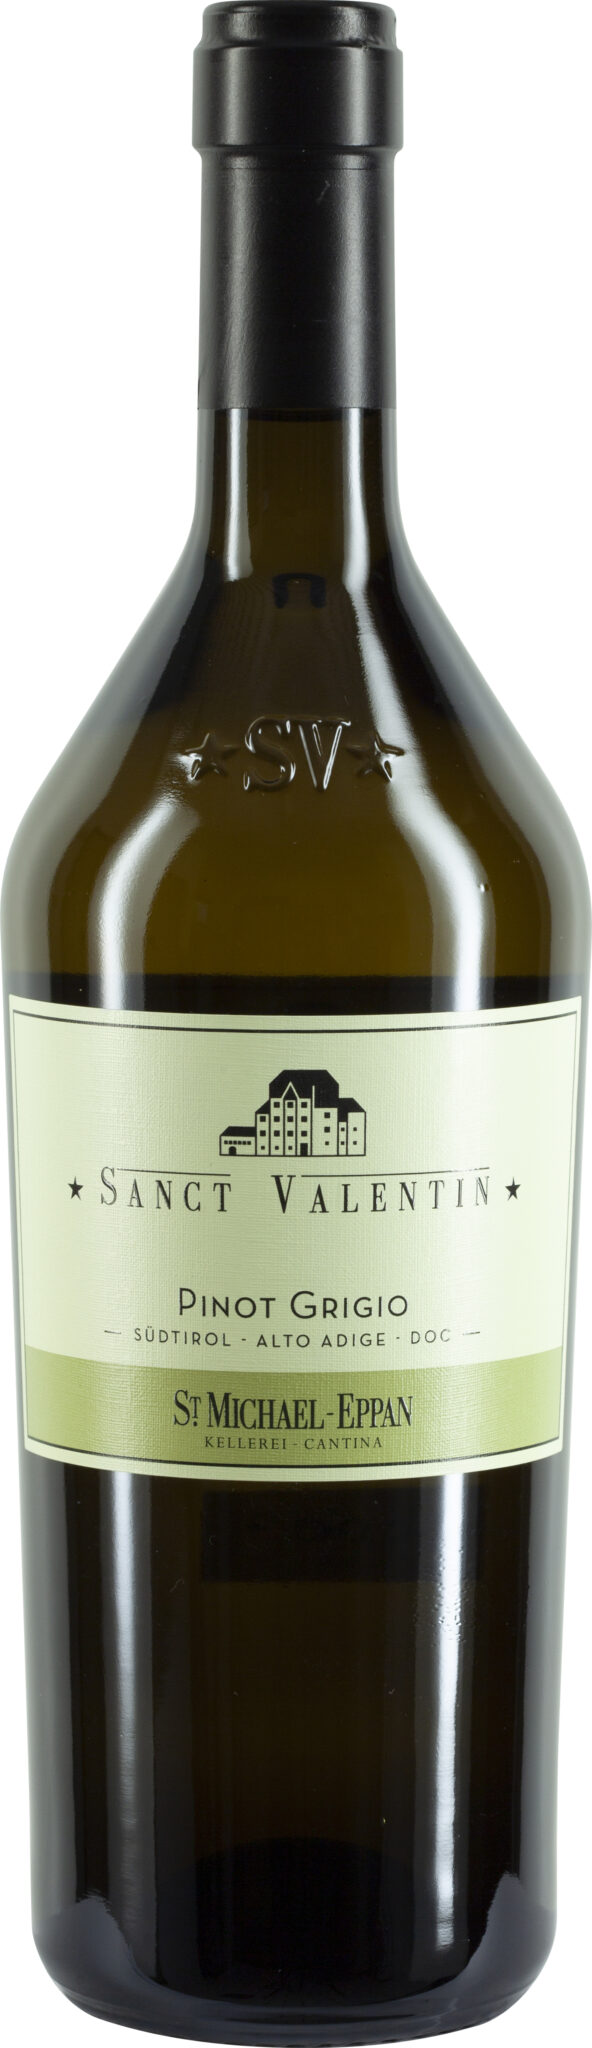 St. Michael-Eppan - Sanct Valentin, Pinot Grigio Alto Adige DOC